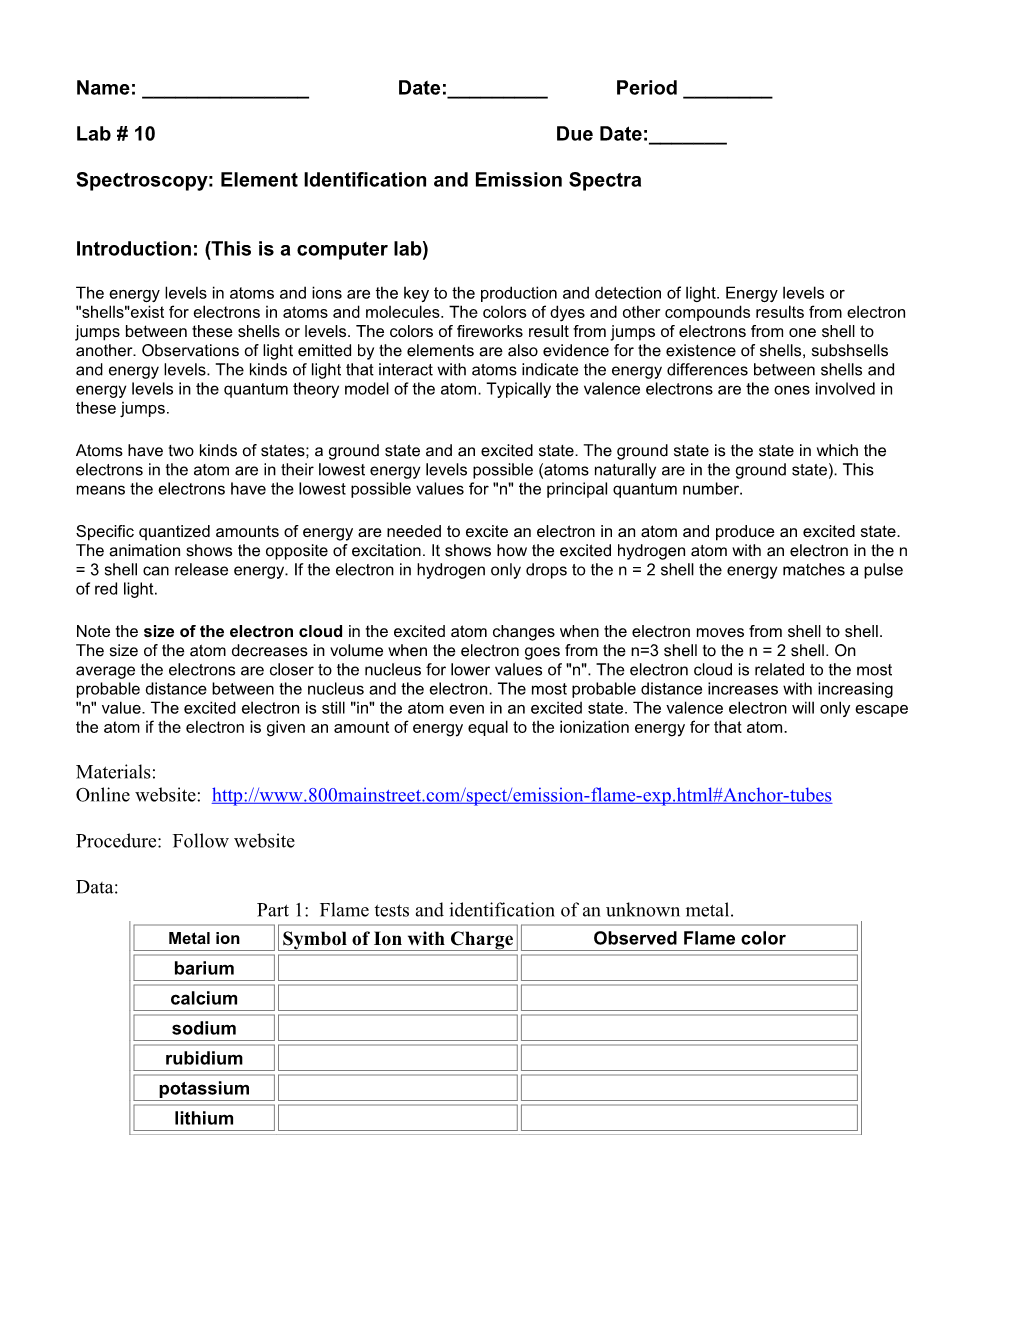 Spectroscopy: Element Identification and Emission Spectra